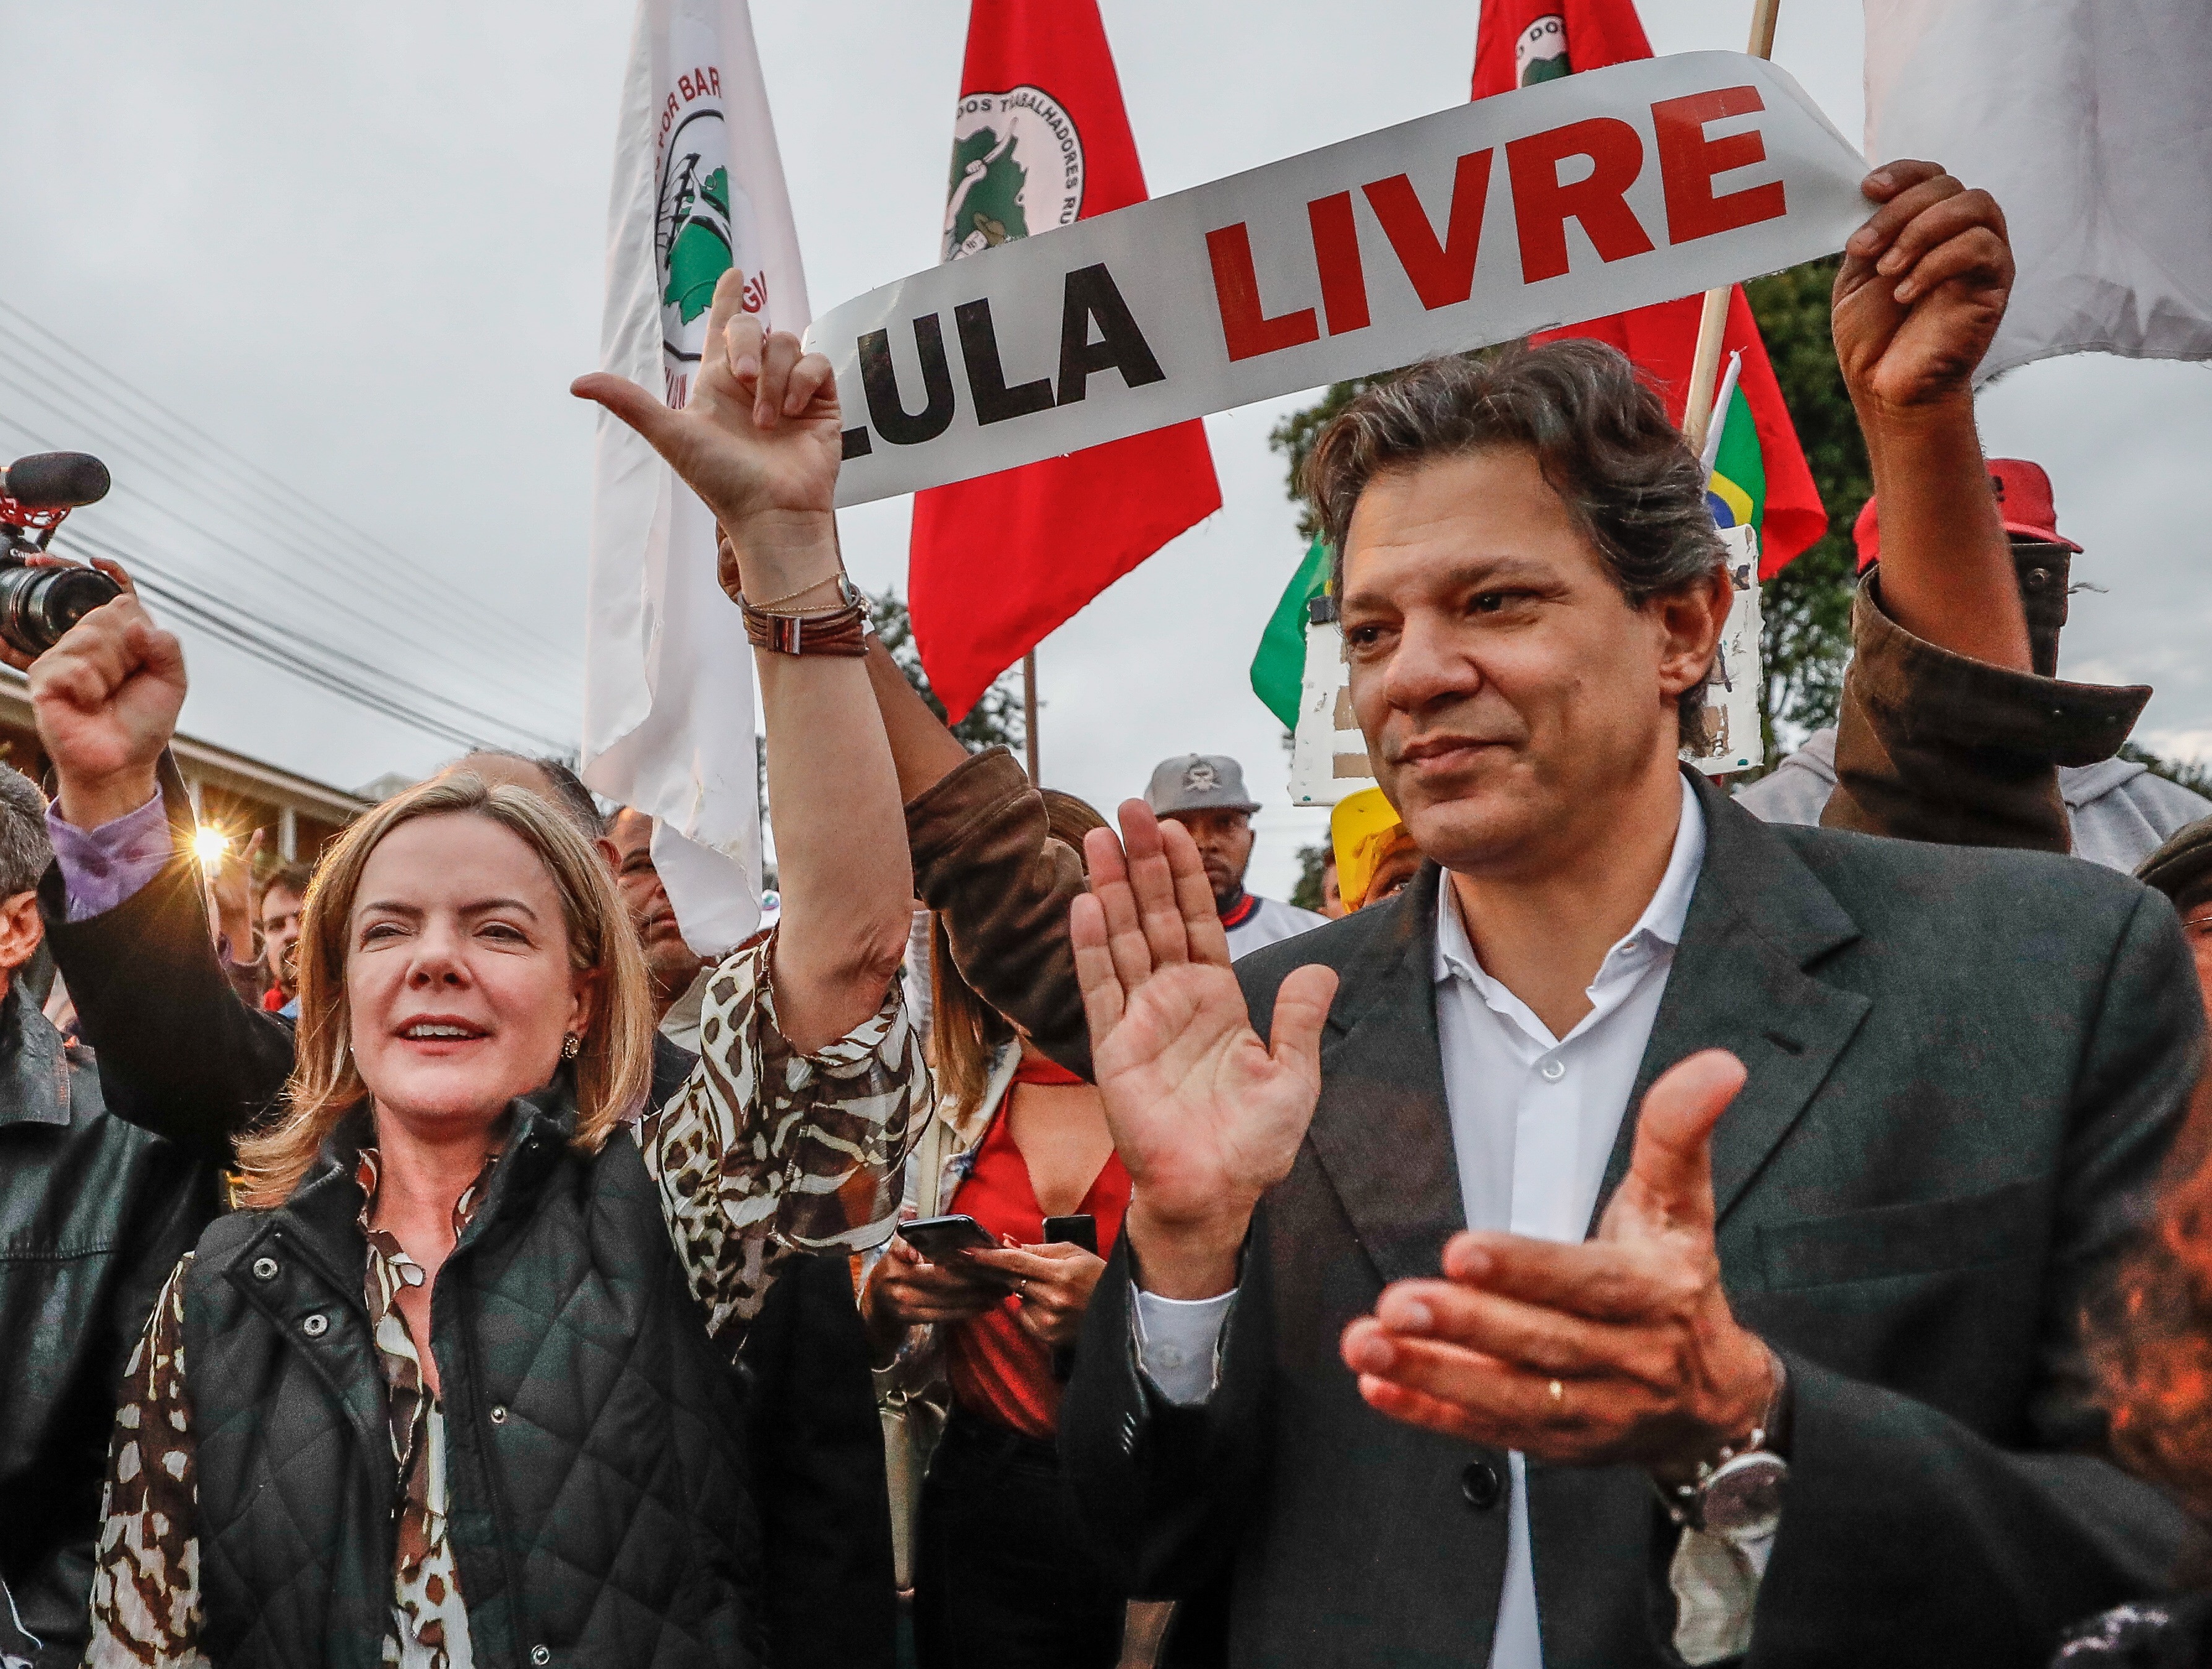 Salário mínimo: Haddad conta mentira e Gleisi ataca decreto de Dilma.